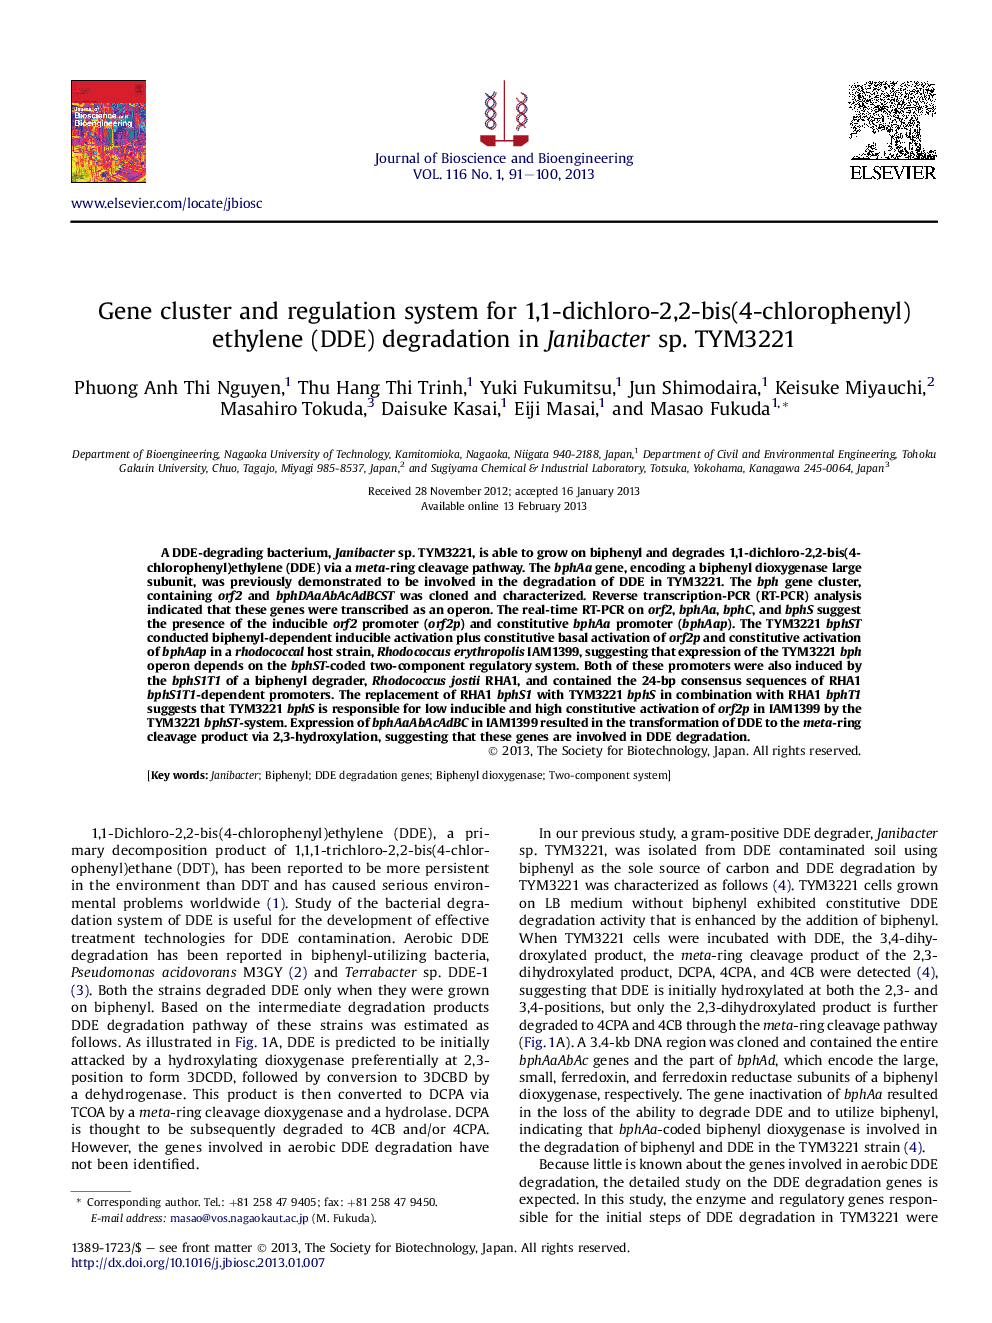 Gene cluster and regulation system for 1,1-dichloro-2,2-bis(4-chlorophenyl)ethylene (DDE) degradation in Janibacter sp. TYM3221